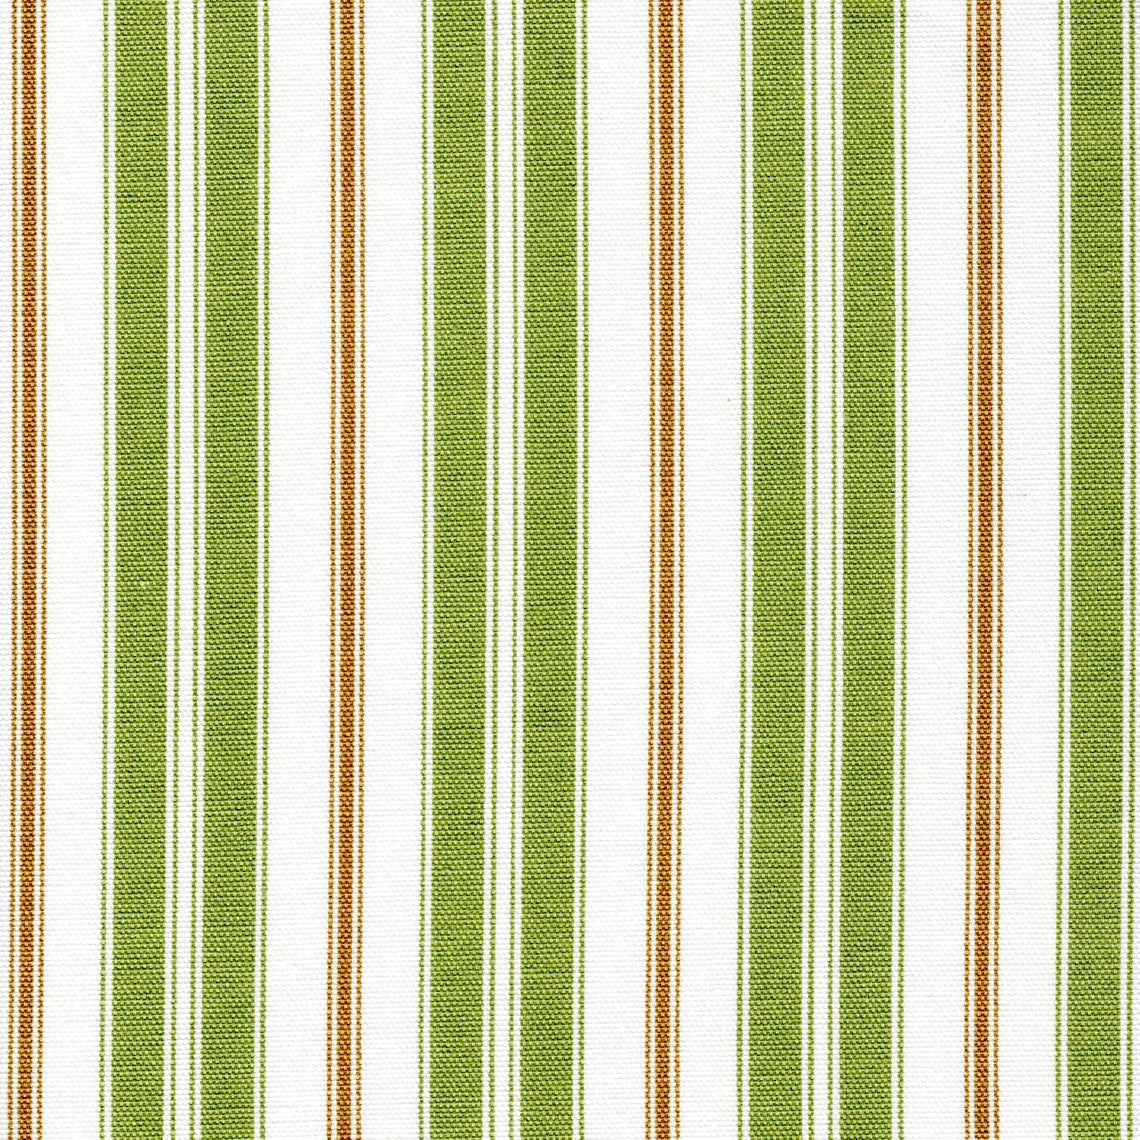 bed scarf in newbury aloe green stripe- green, brown, white